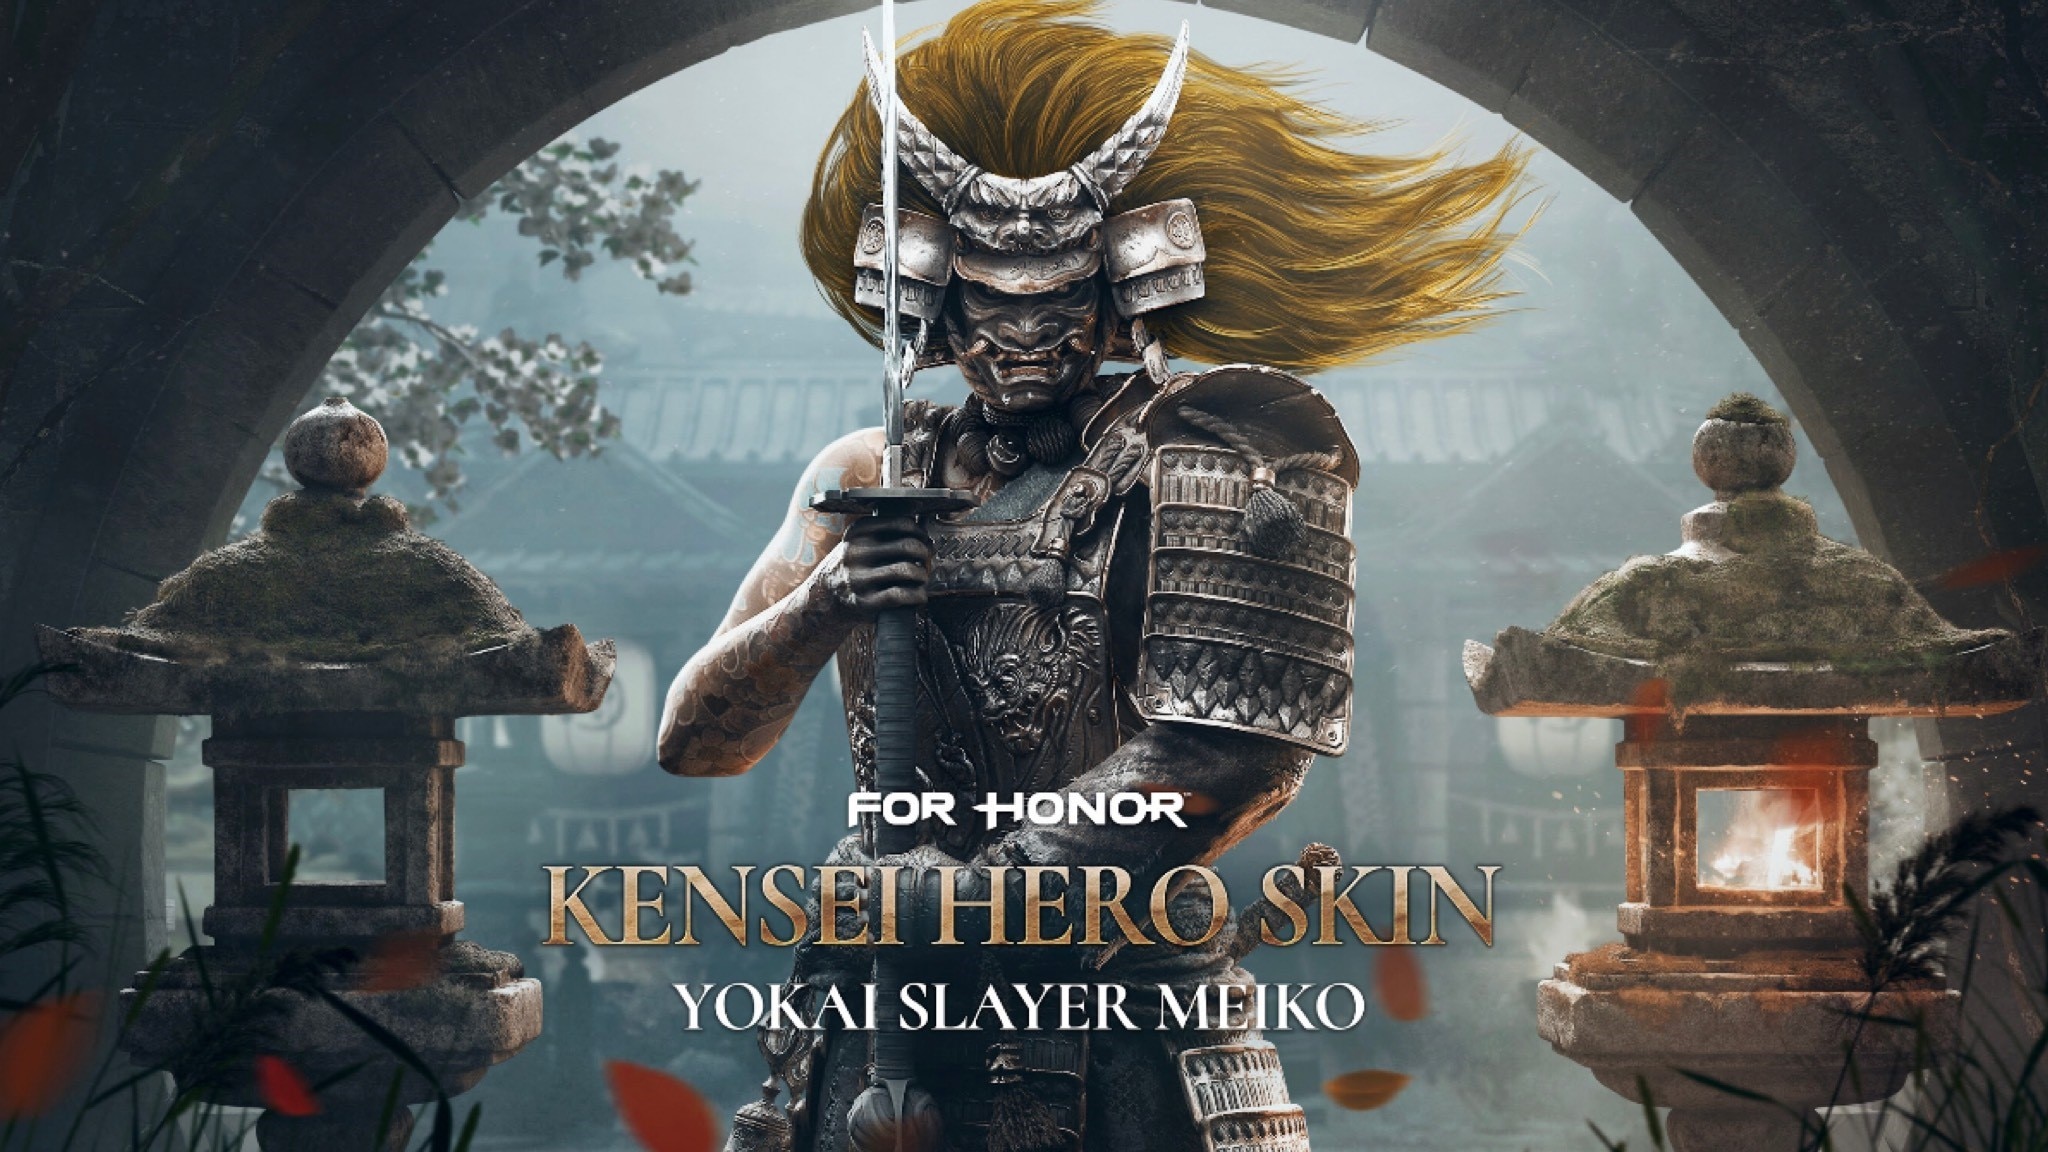 [FH] News - Warrior's Den Recap Oct 13th - Hero Skin